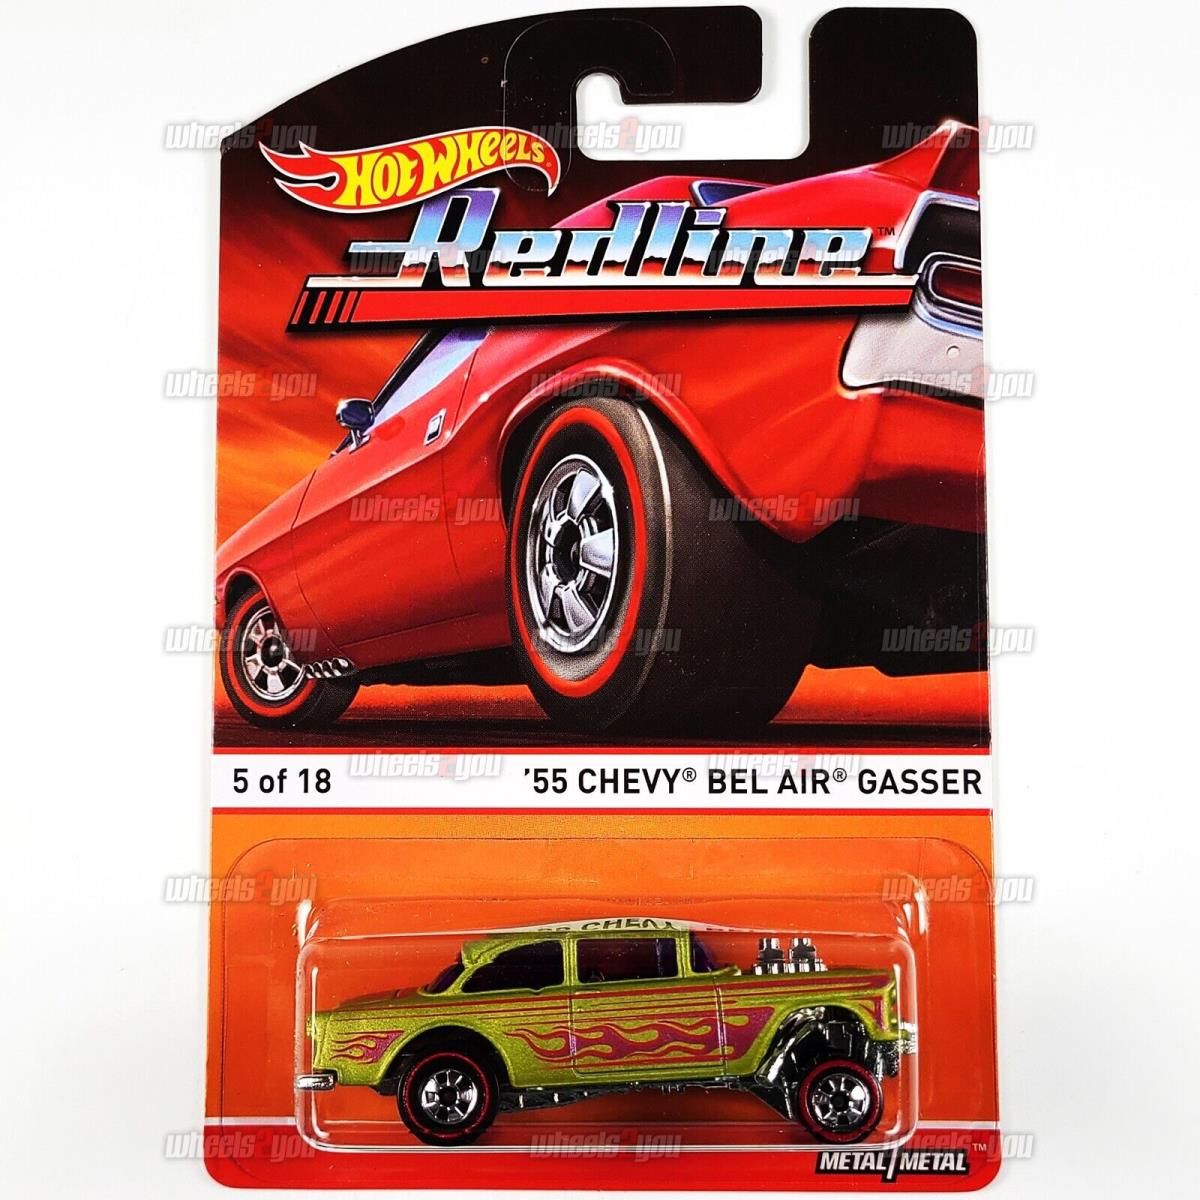 55 Chevy Bel Air Gasser 5 Gold - 2015 Hot Wheels Heritage Redline 1:64 HW